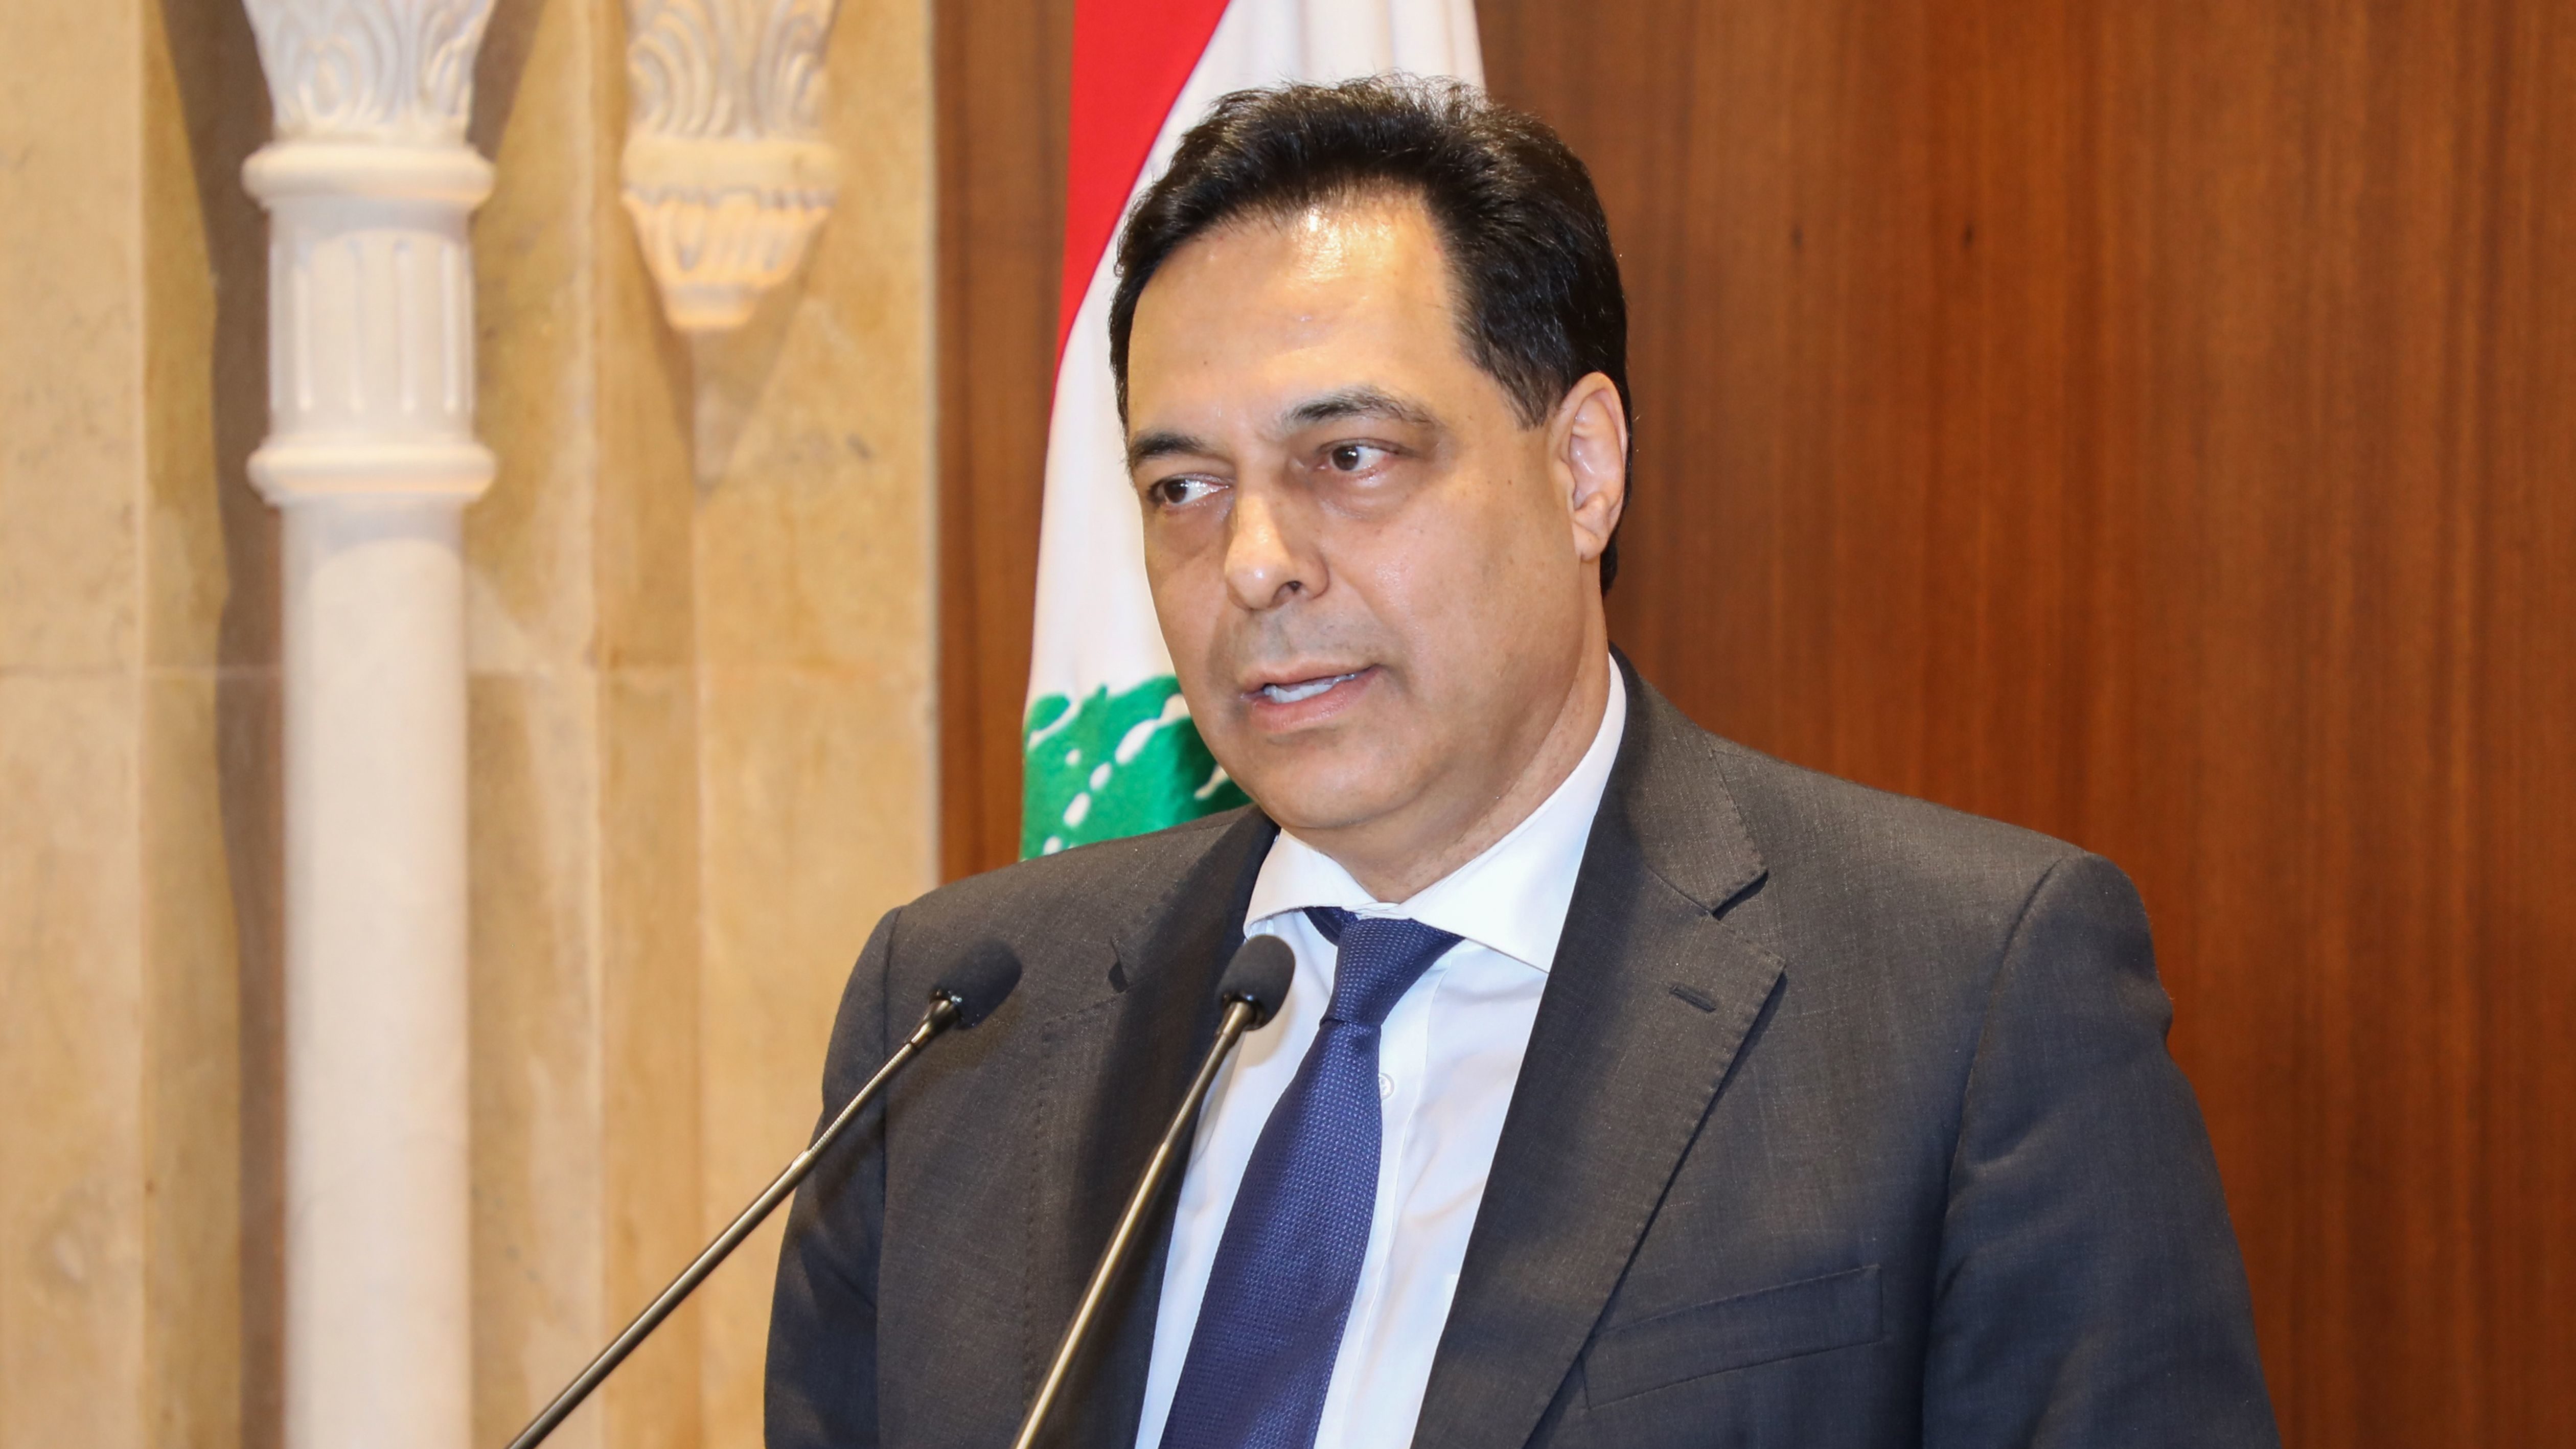 Lebanon’s Prime Minister-Designate May Be Doomed to Fail